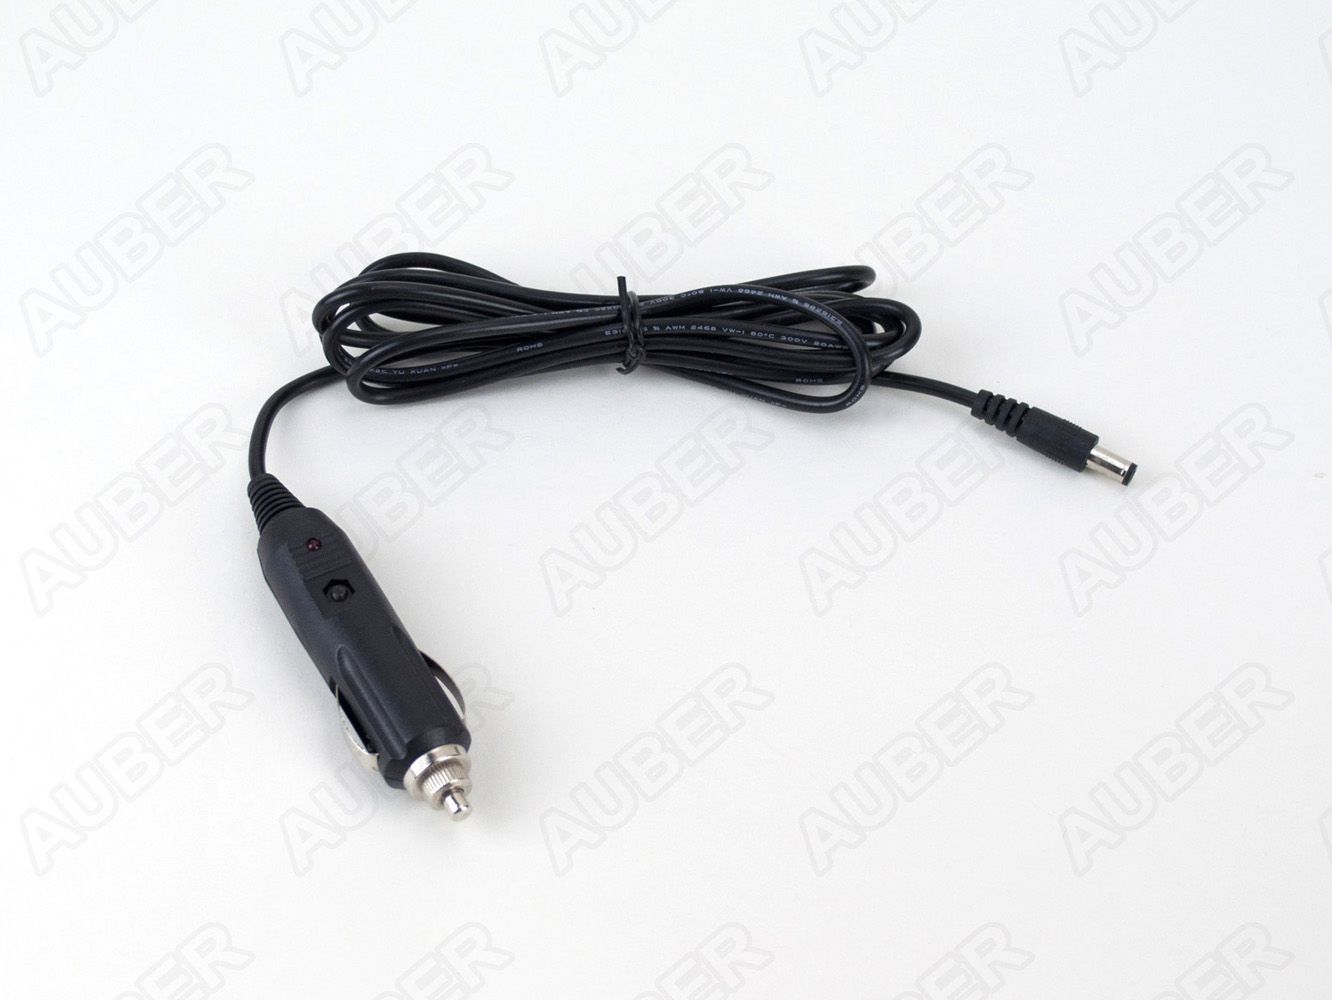 Power cord w/ car charger plug